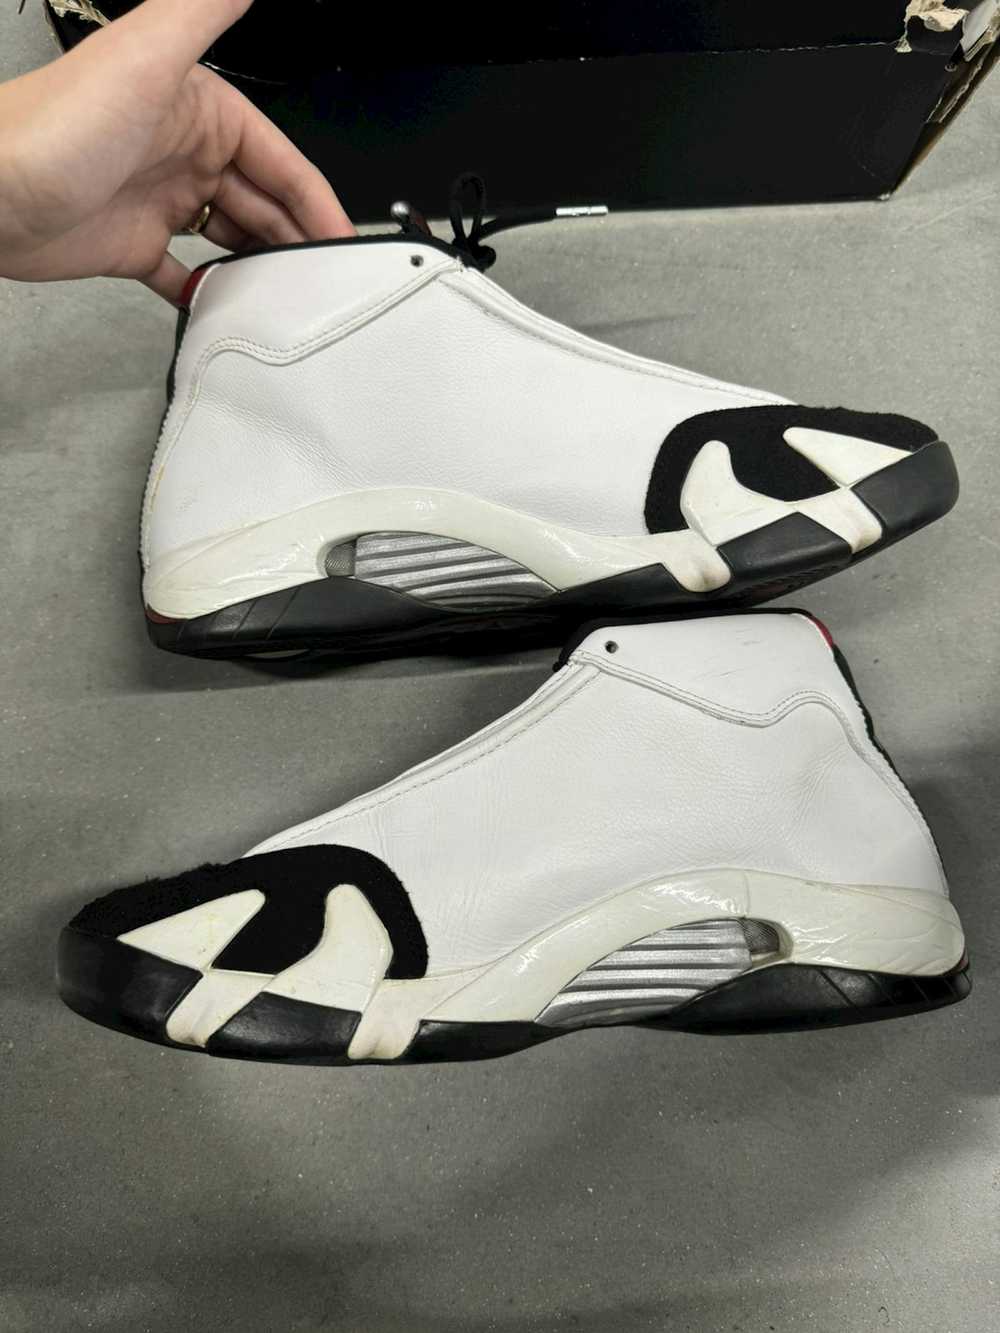 Jordan Brand Used Jordan 14 “Black Toe” 2014 - image 2